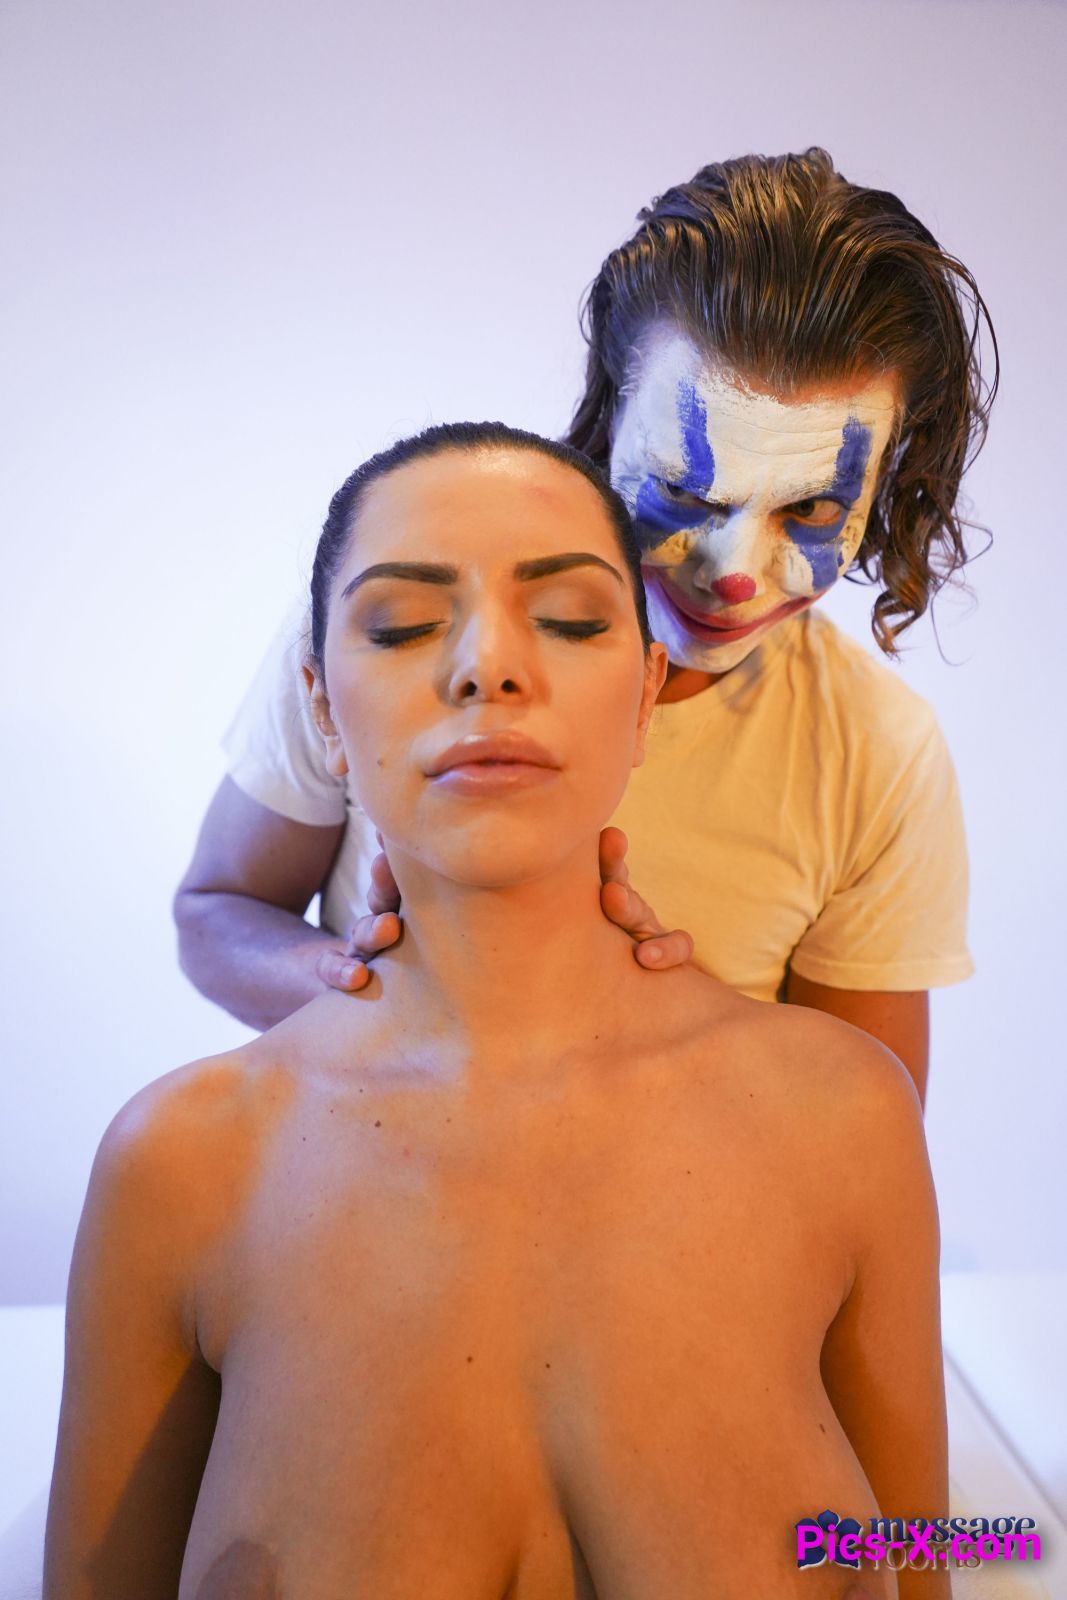 Joker gives wonder woman a massage - Massage Rooms - Image 8